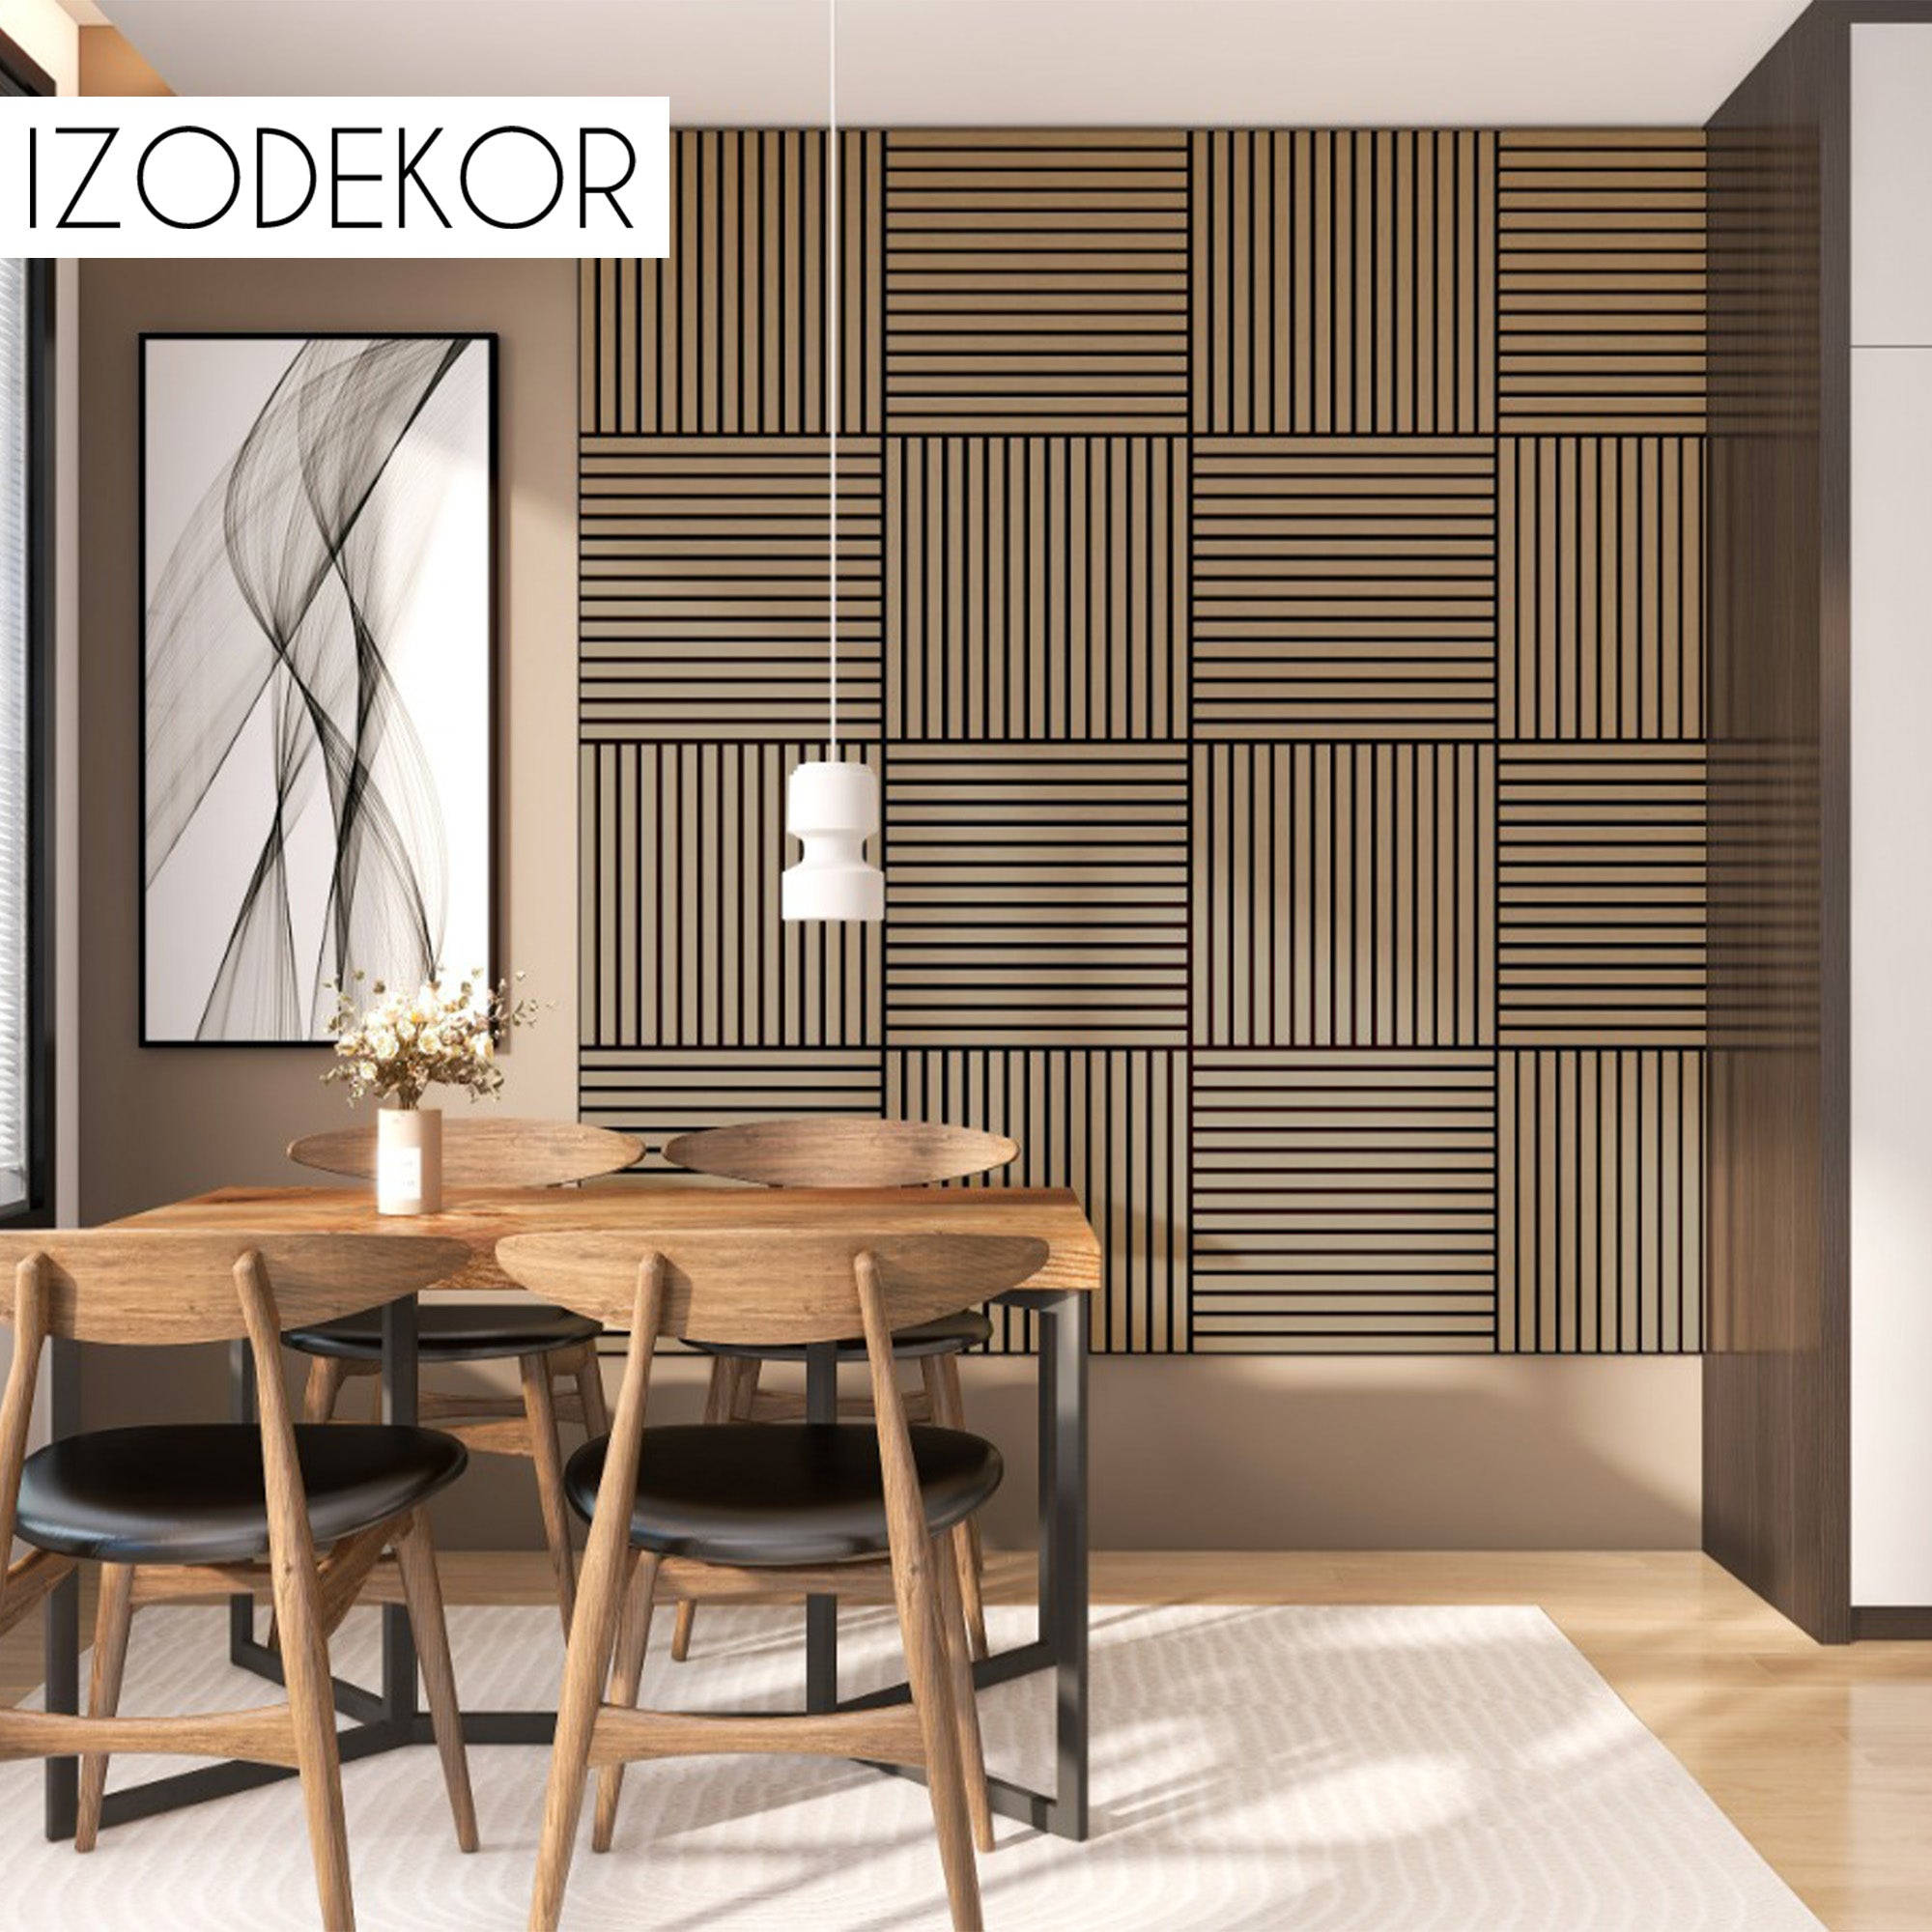 Izodekor Natural Acoustic Wood Panels 60x60cm (4 pcs in pack)